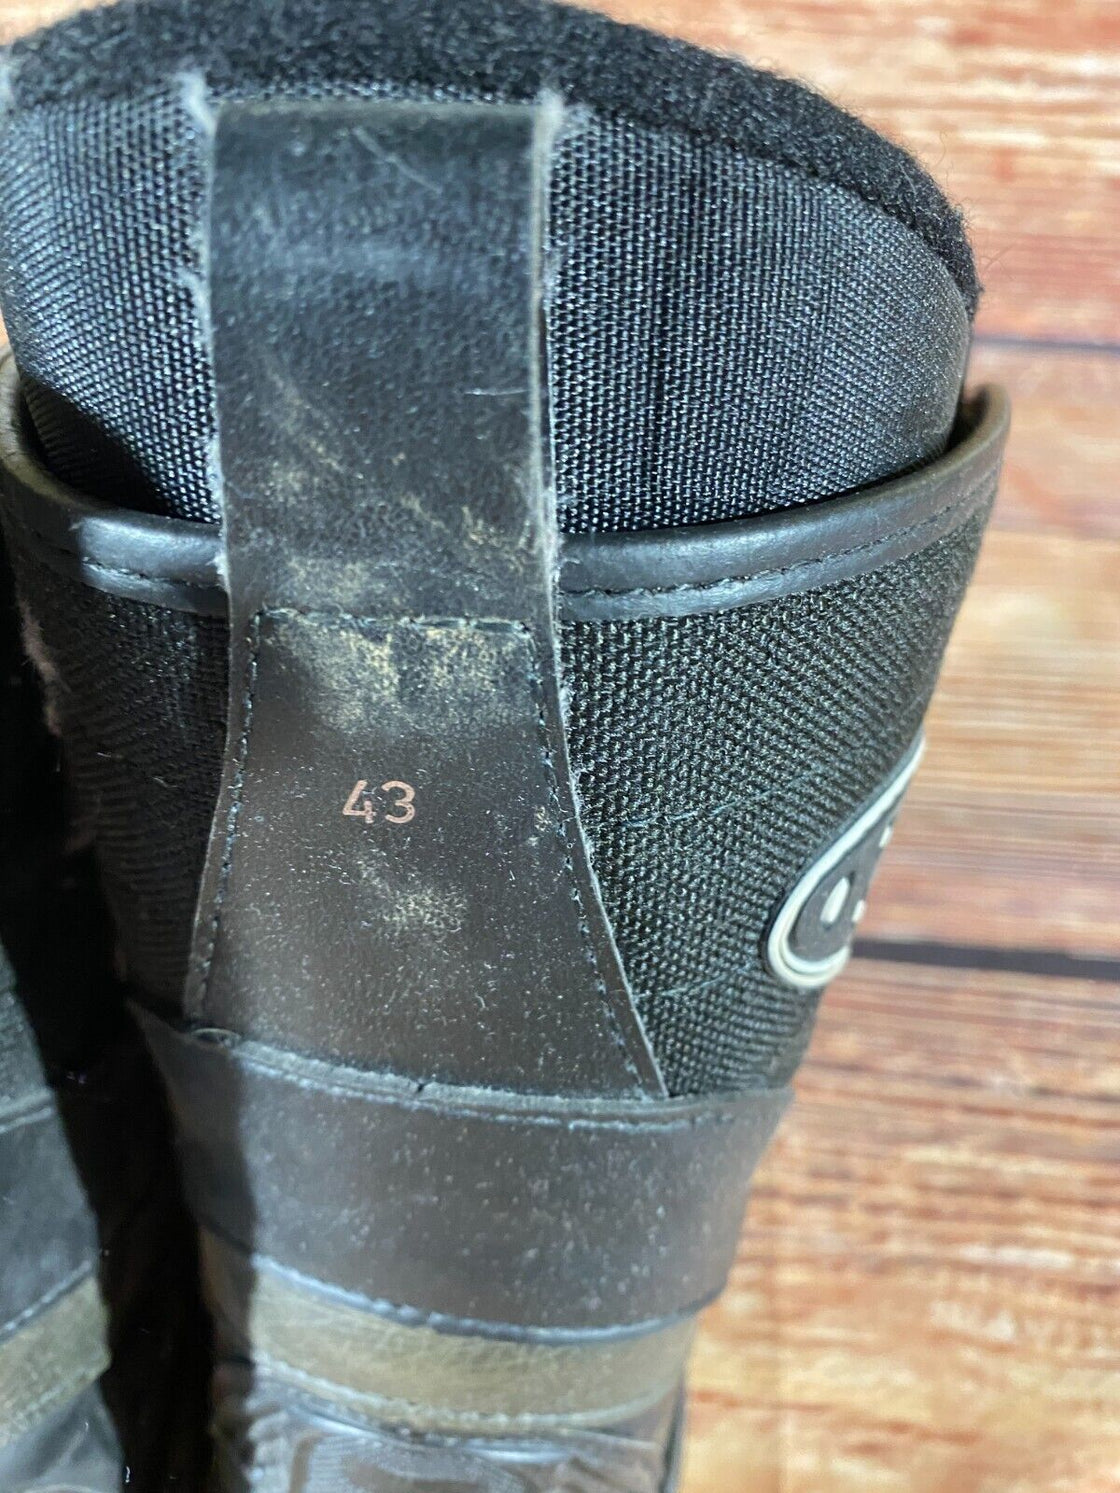 K2 Vintage Snowboard Boots Size EU43, US10, UK9, Mondo 275 mm